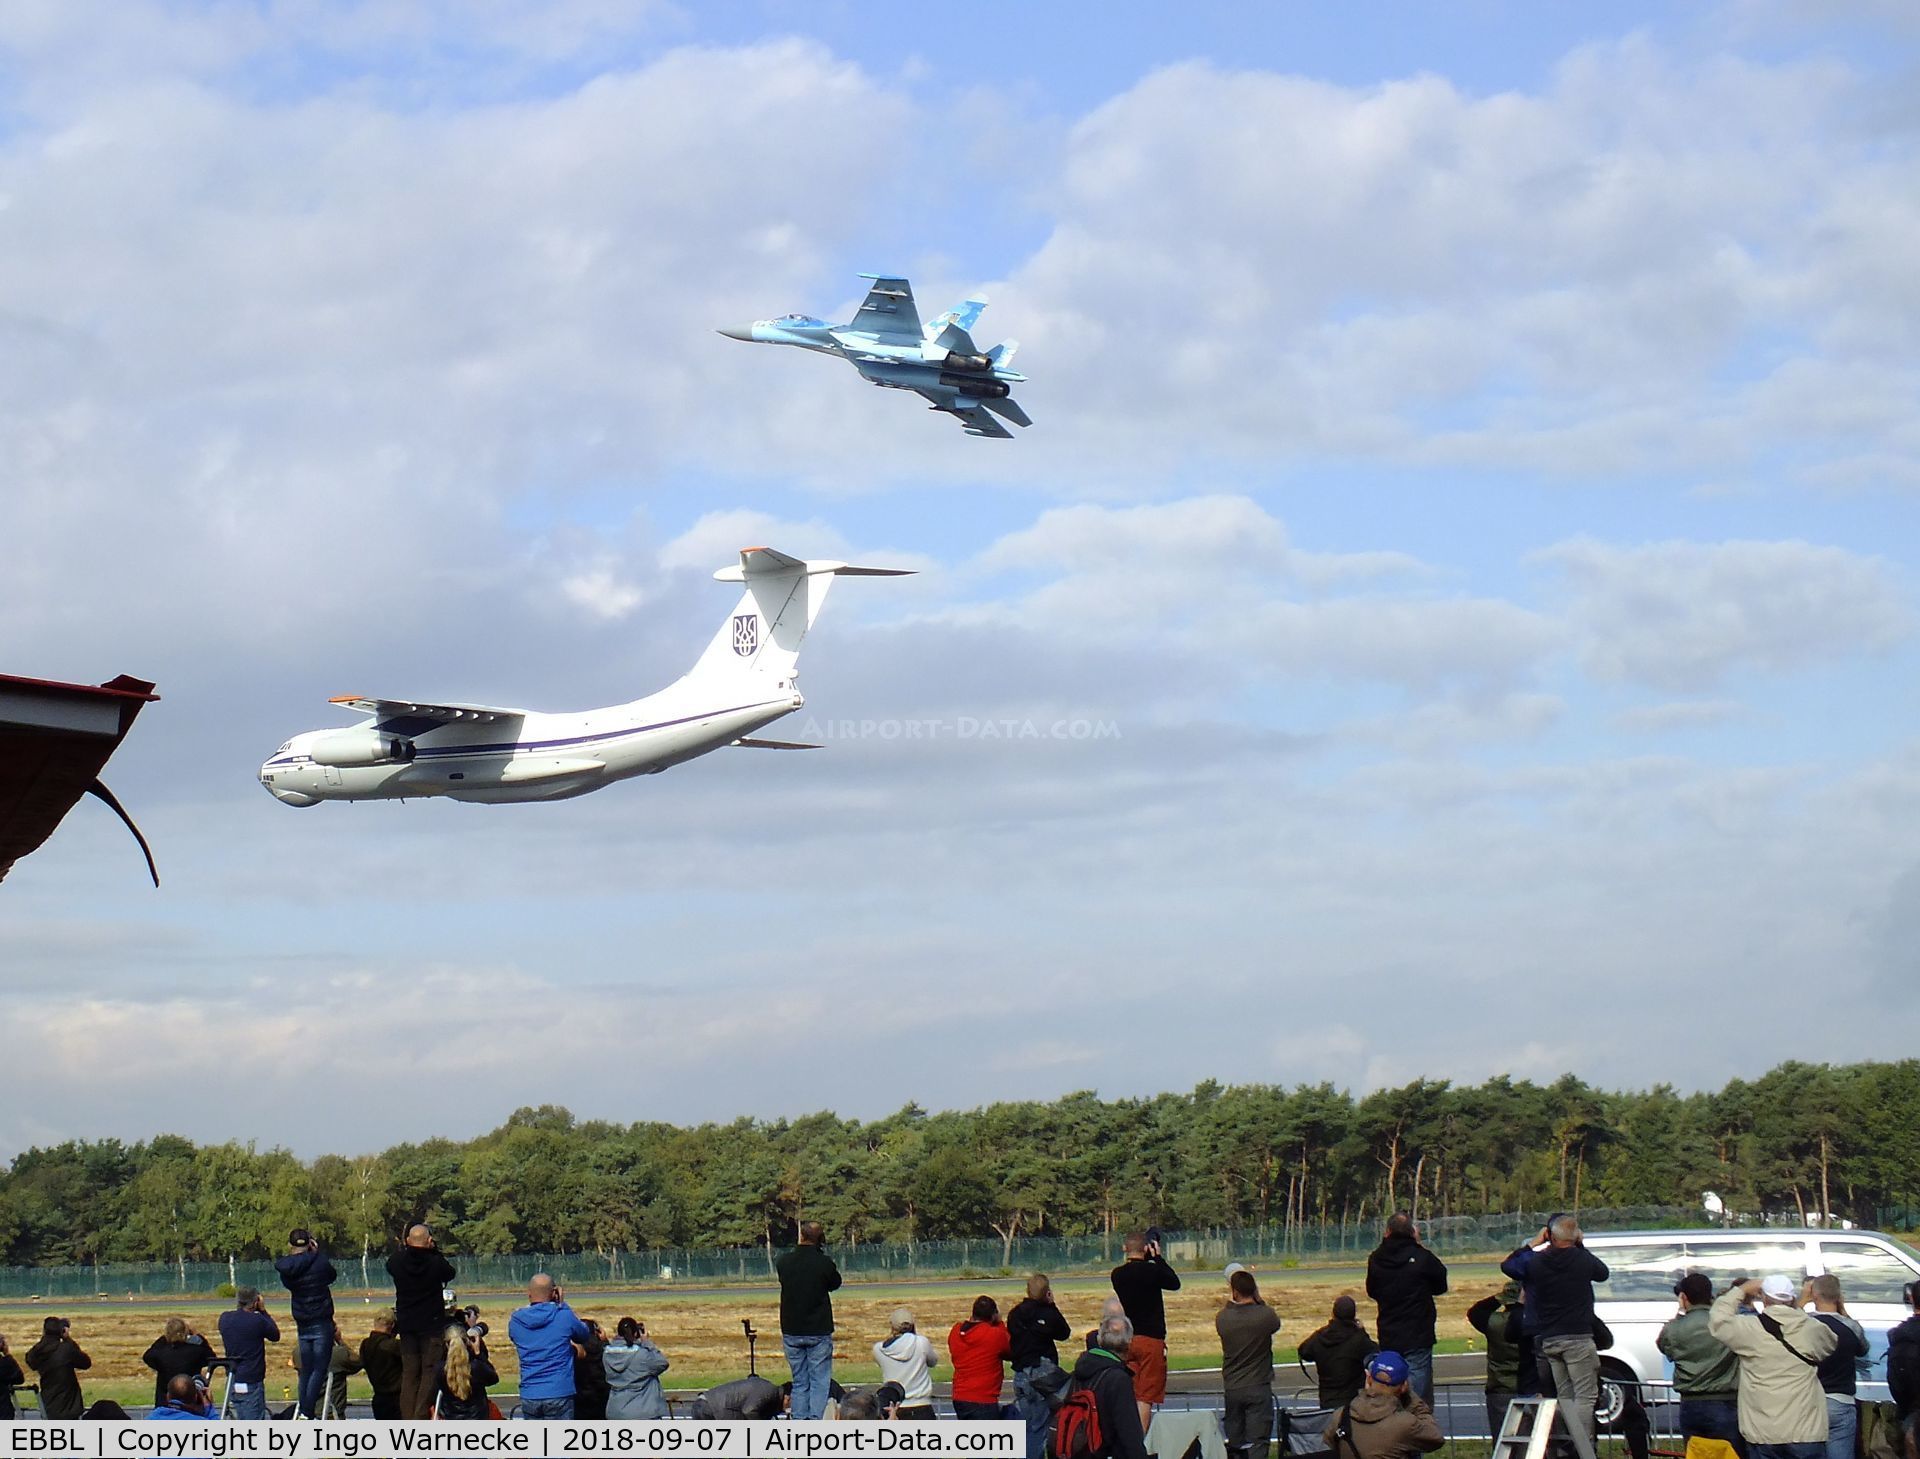 Kleine Brogel Air Base Airport, Kleine Brogel Belgium (EBBL) - Ilyushin Il-76 and Sukhoi Su-27 of the Ukrainian Air Force flypast at the 2018 BAFD Spottersday at Kleine Brogel airbase